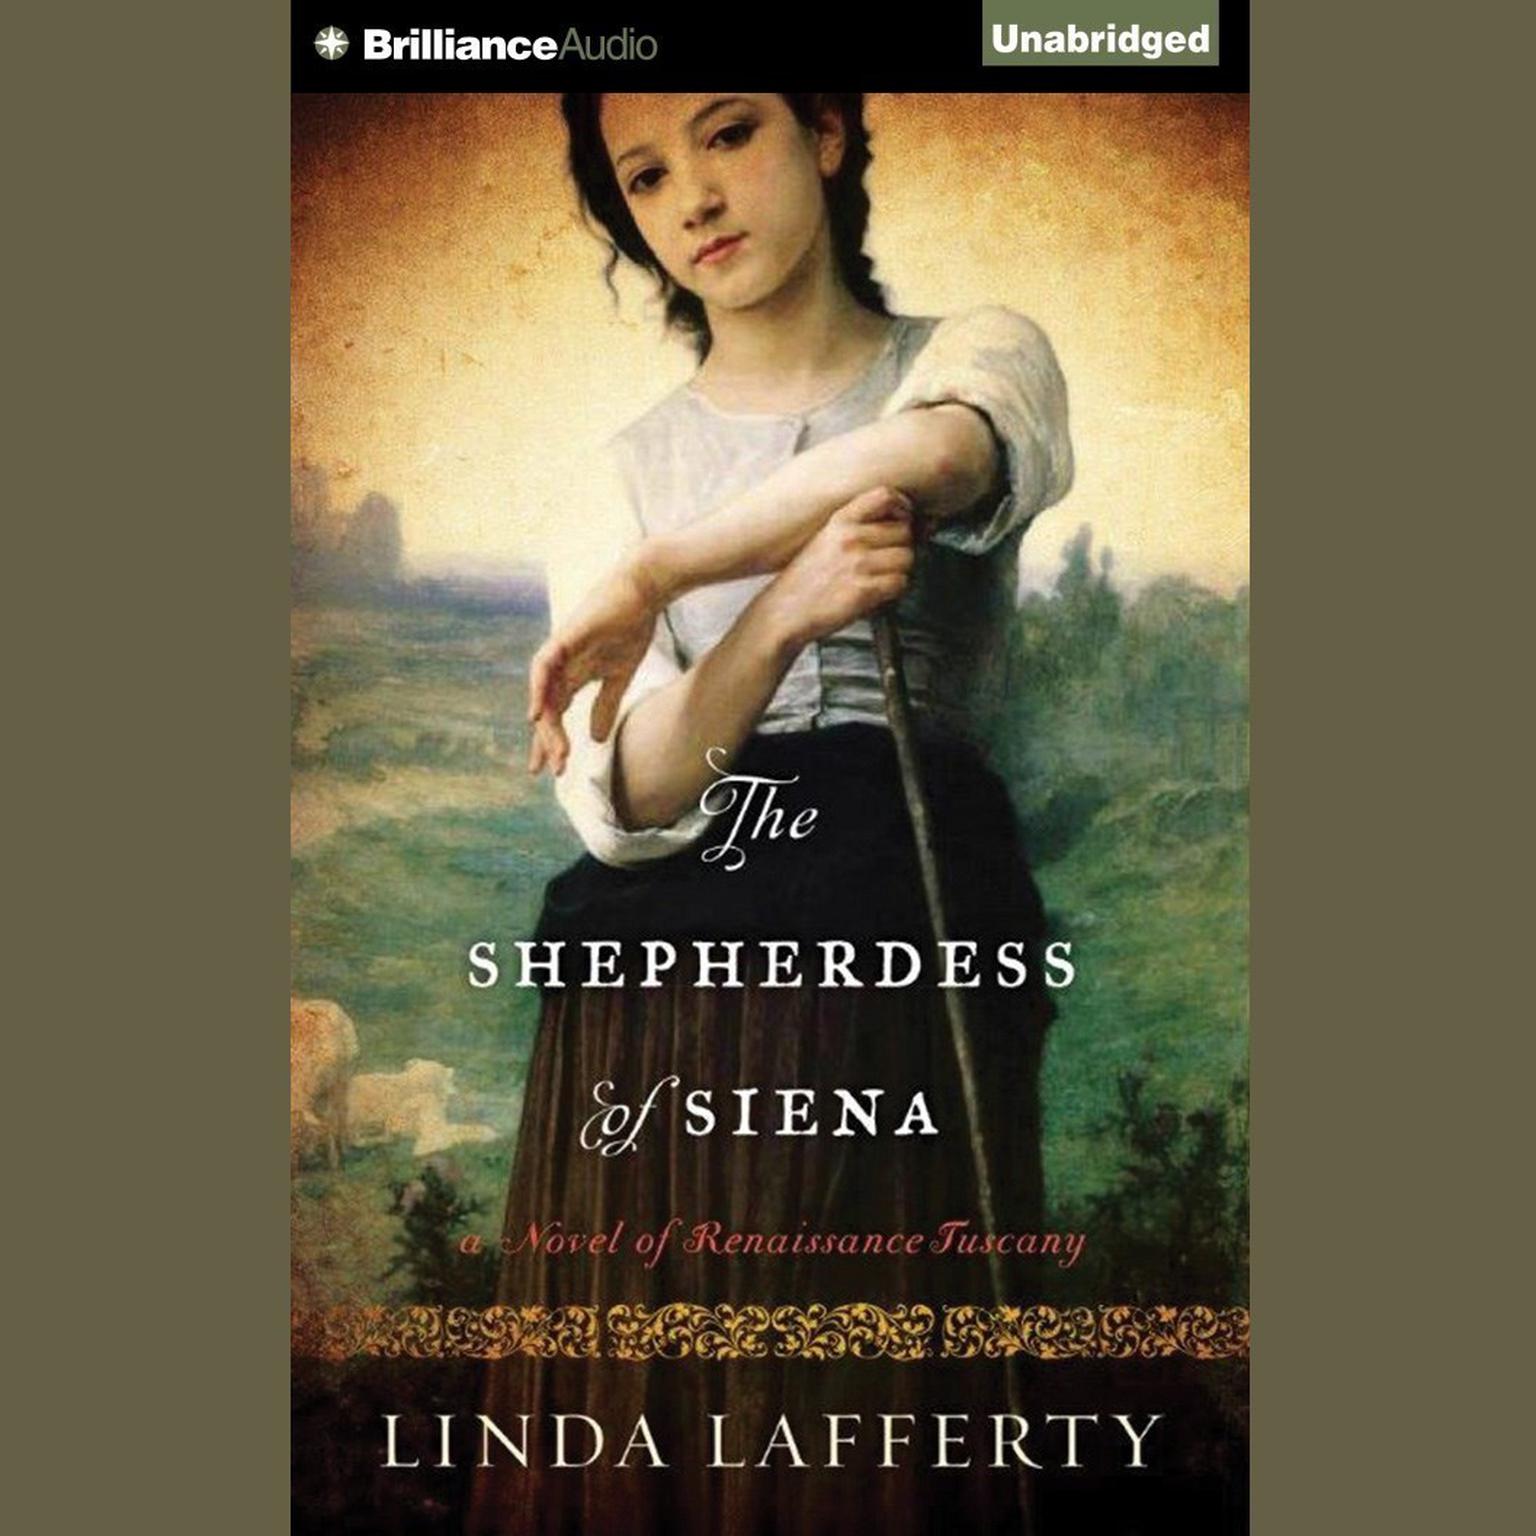 The Shepherdess of Siena: A Novel of Renaissance Tuscany Audiobook, by Linda Lafferty